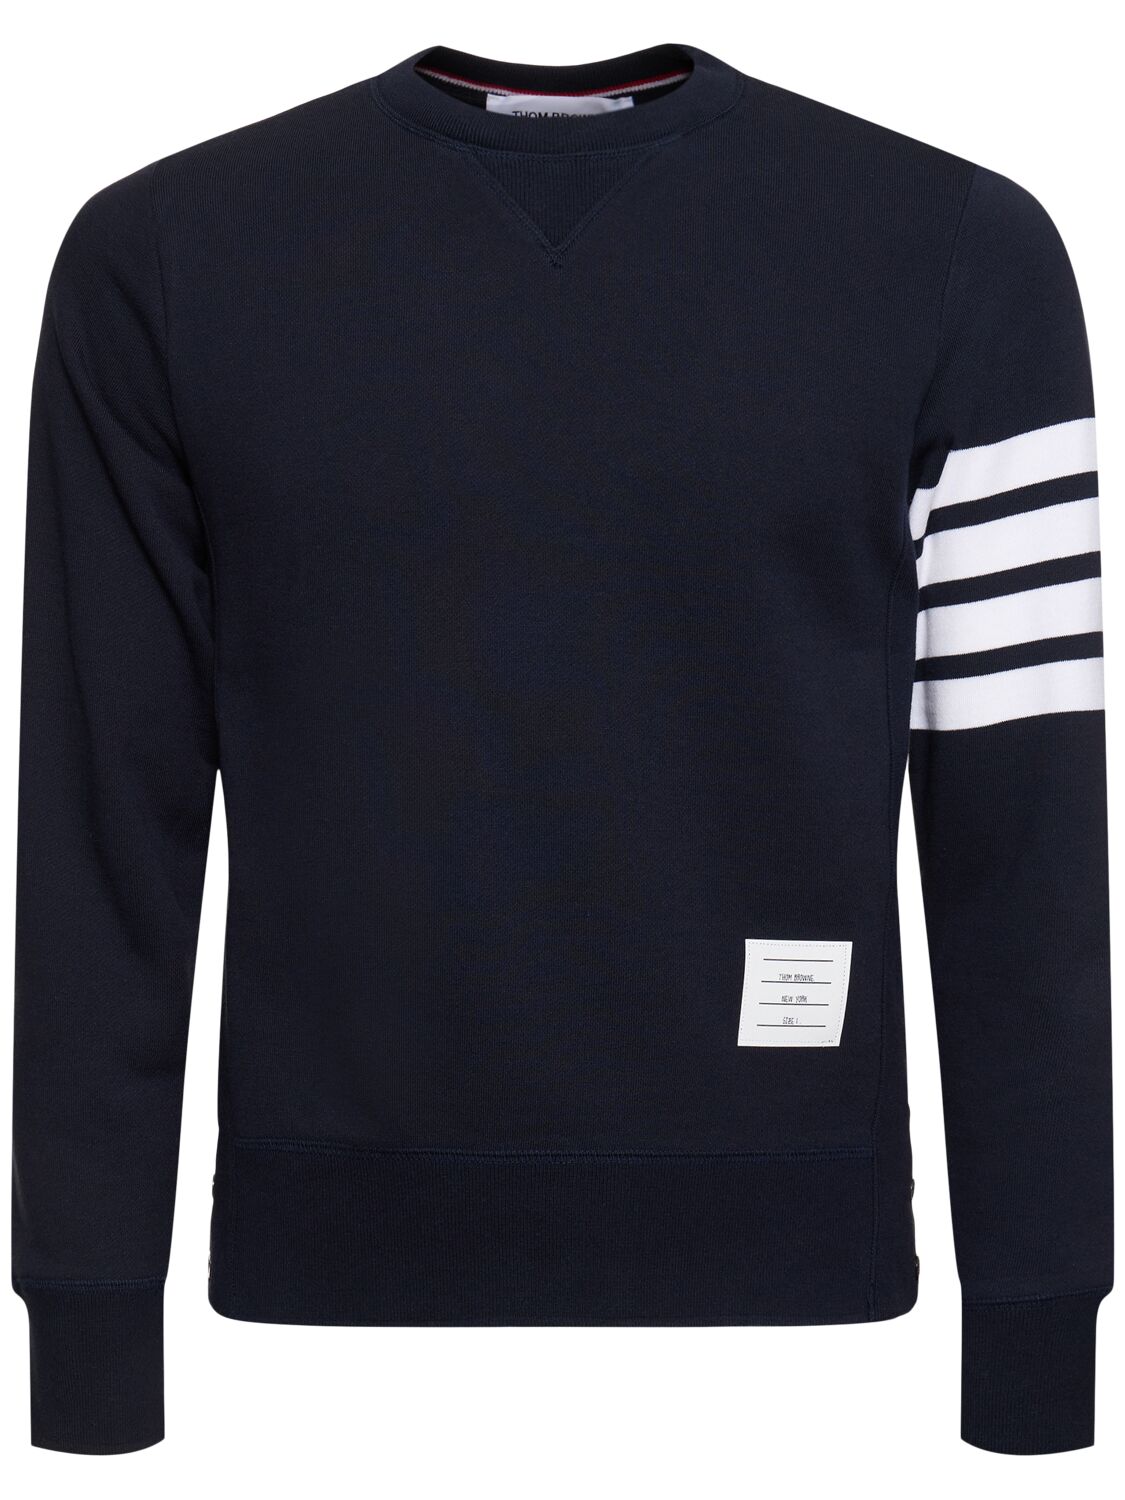 Image of Cotton Jersey Sweatshirt W/ Stripes